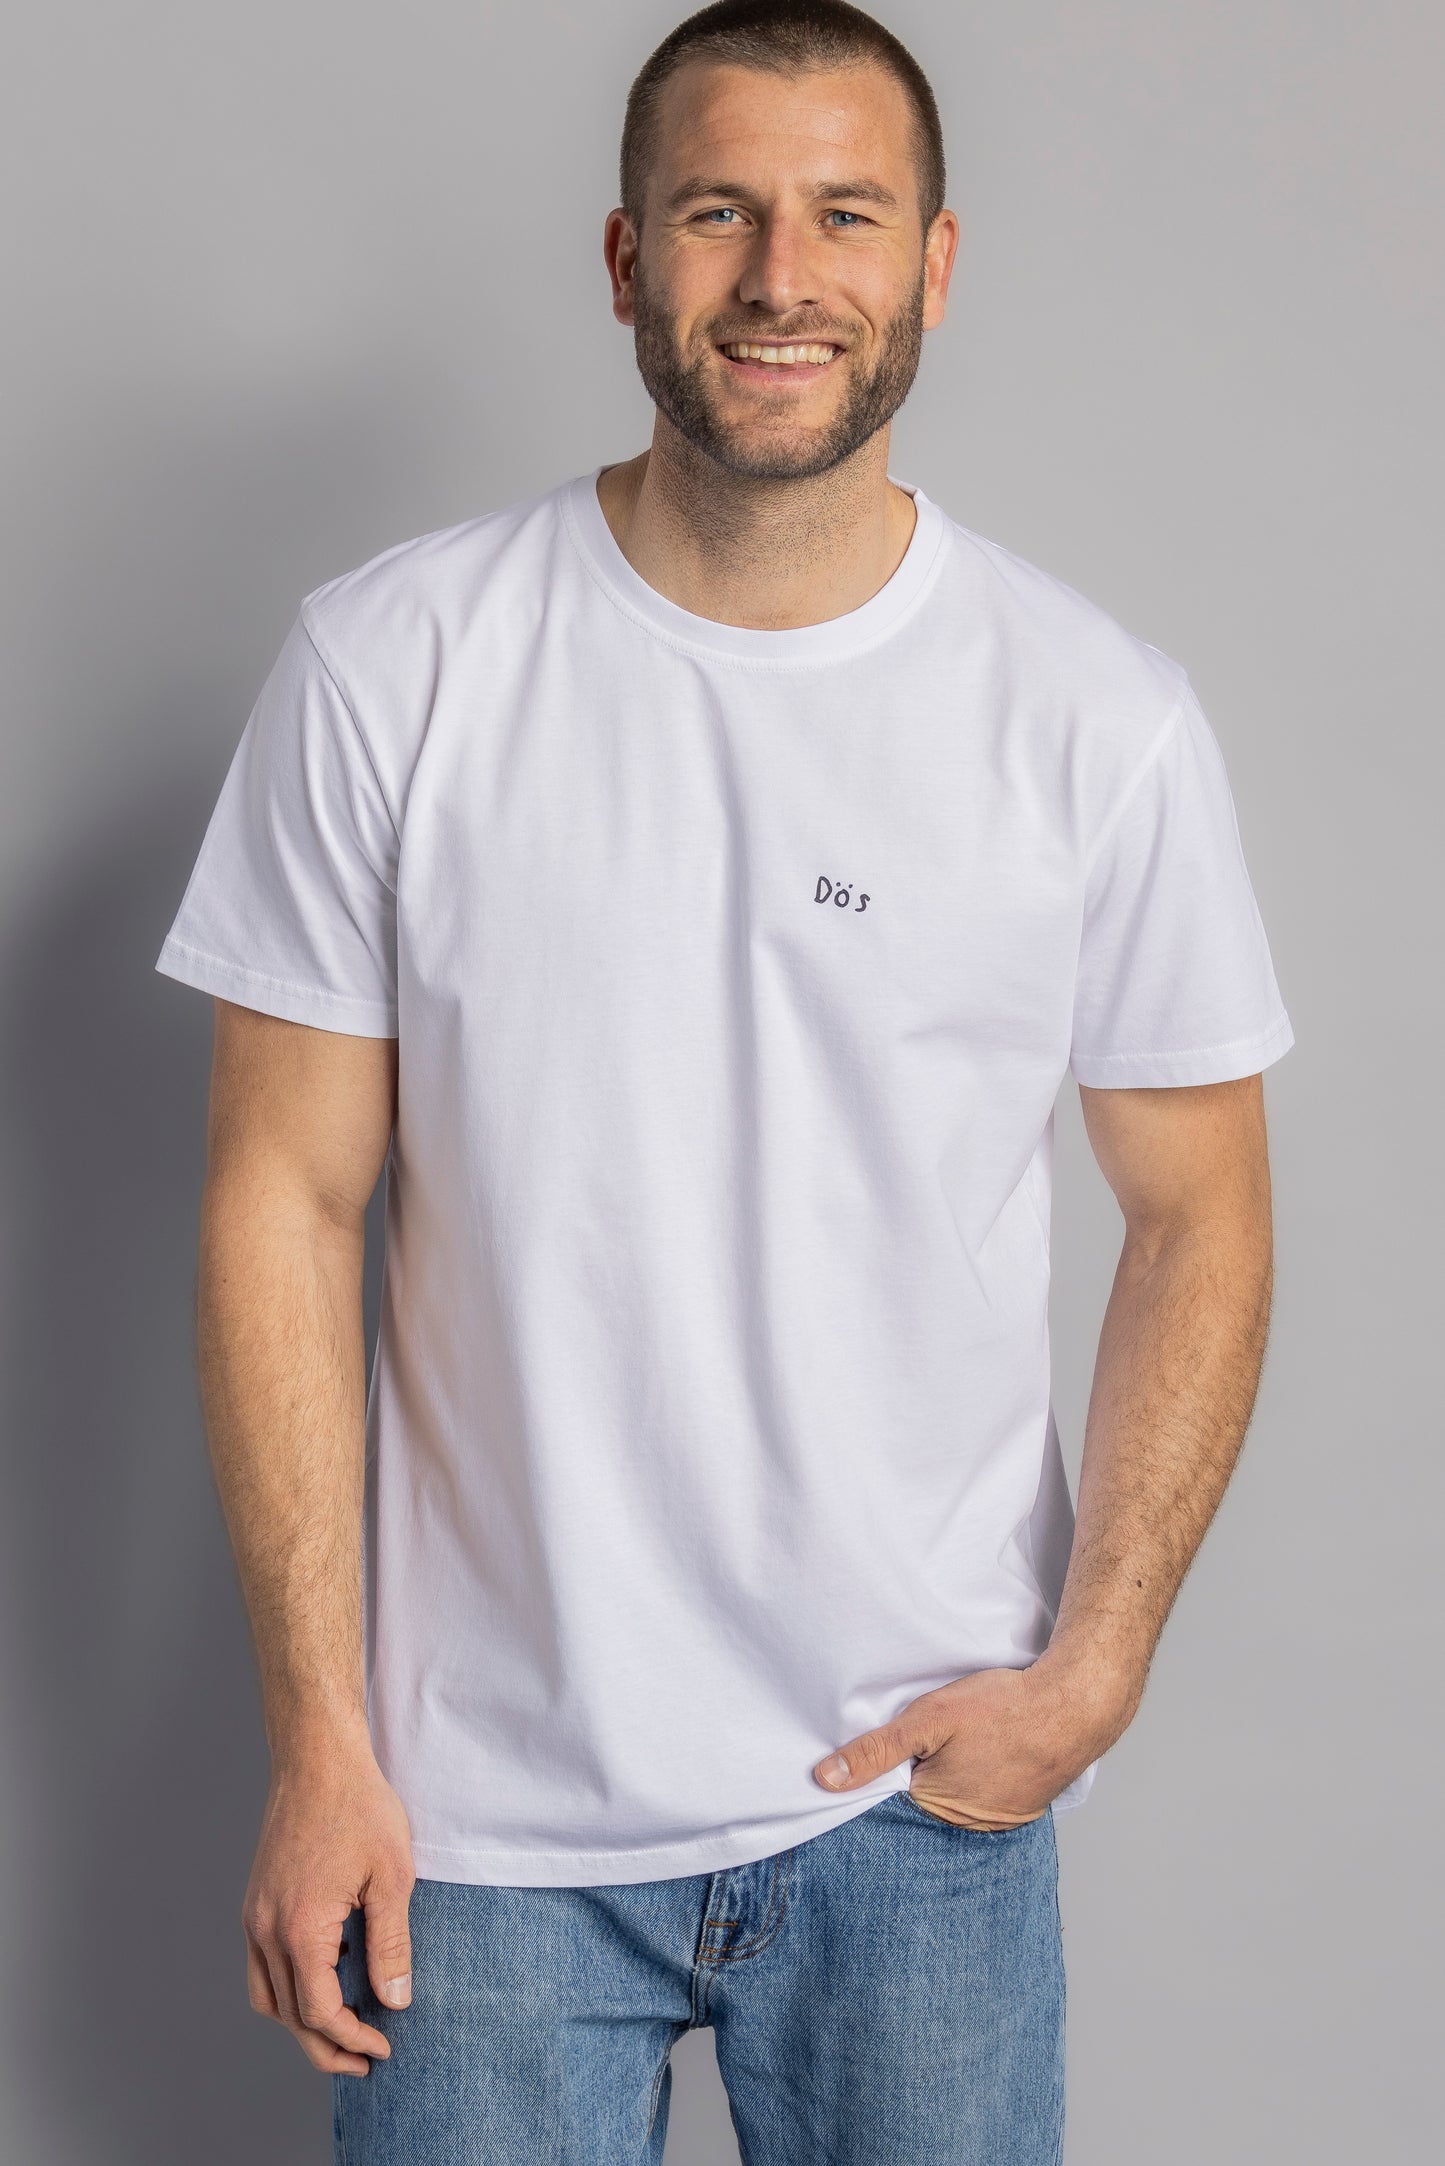 Timo T-shirt STANDARD, white